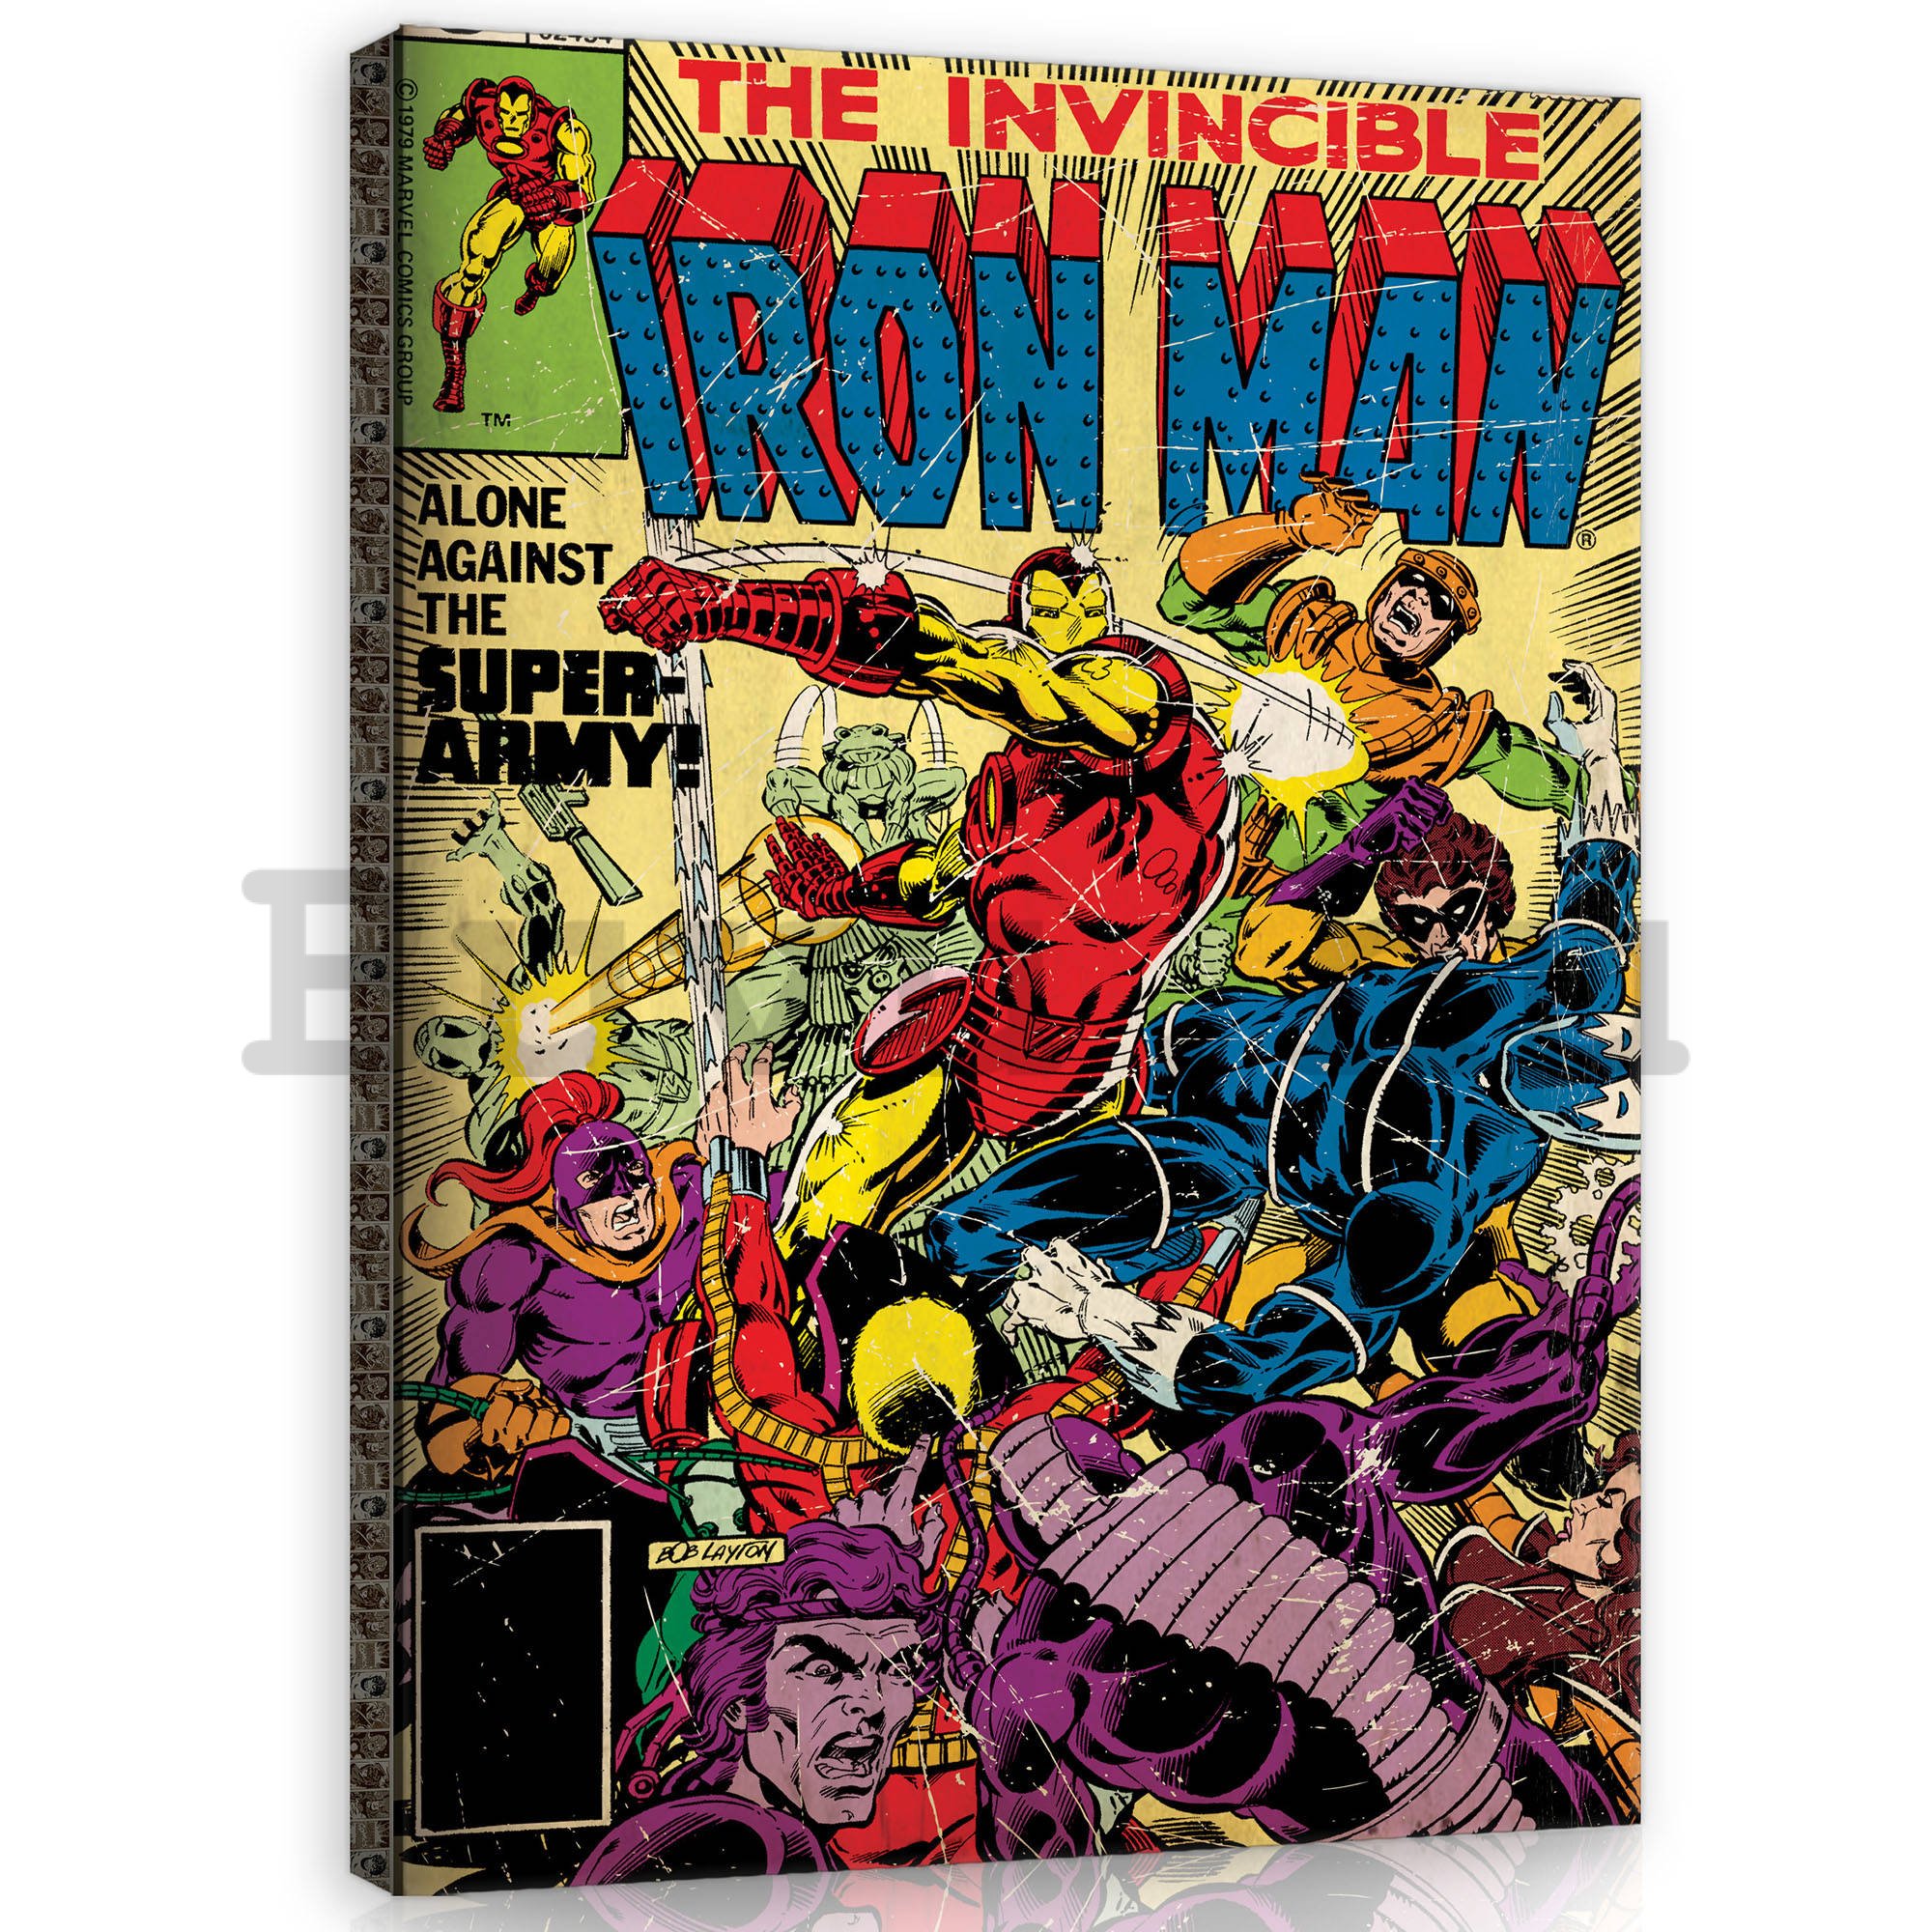 Vászonkép: The Invincible Iron Man (Alone Against the Super-Army!) - 80x60 cm